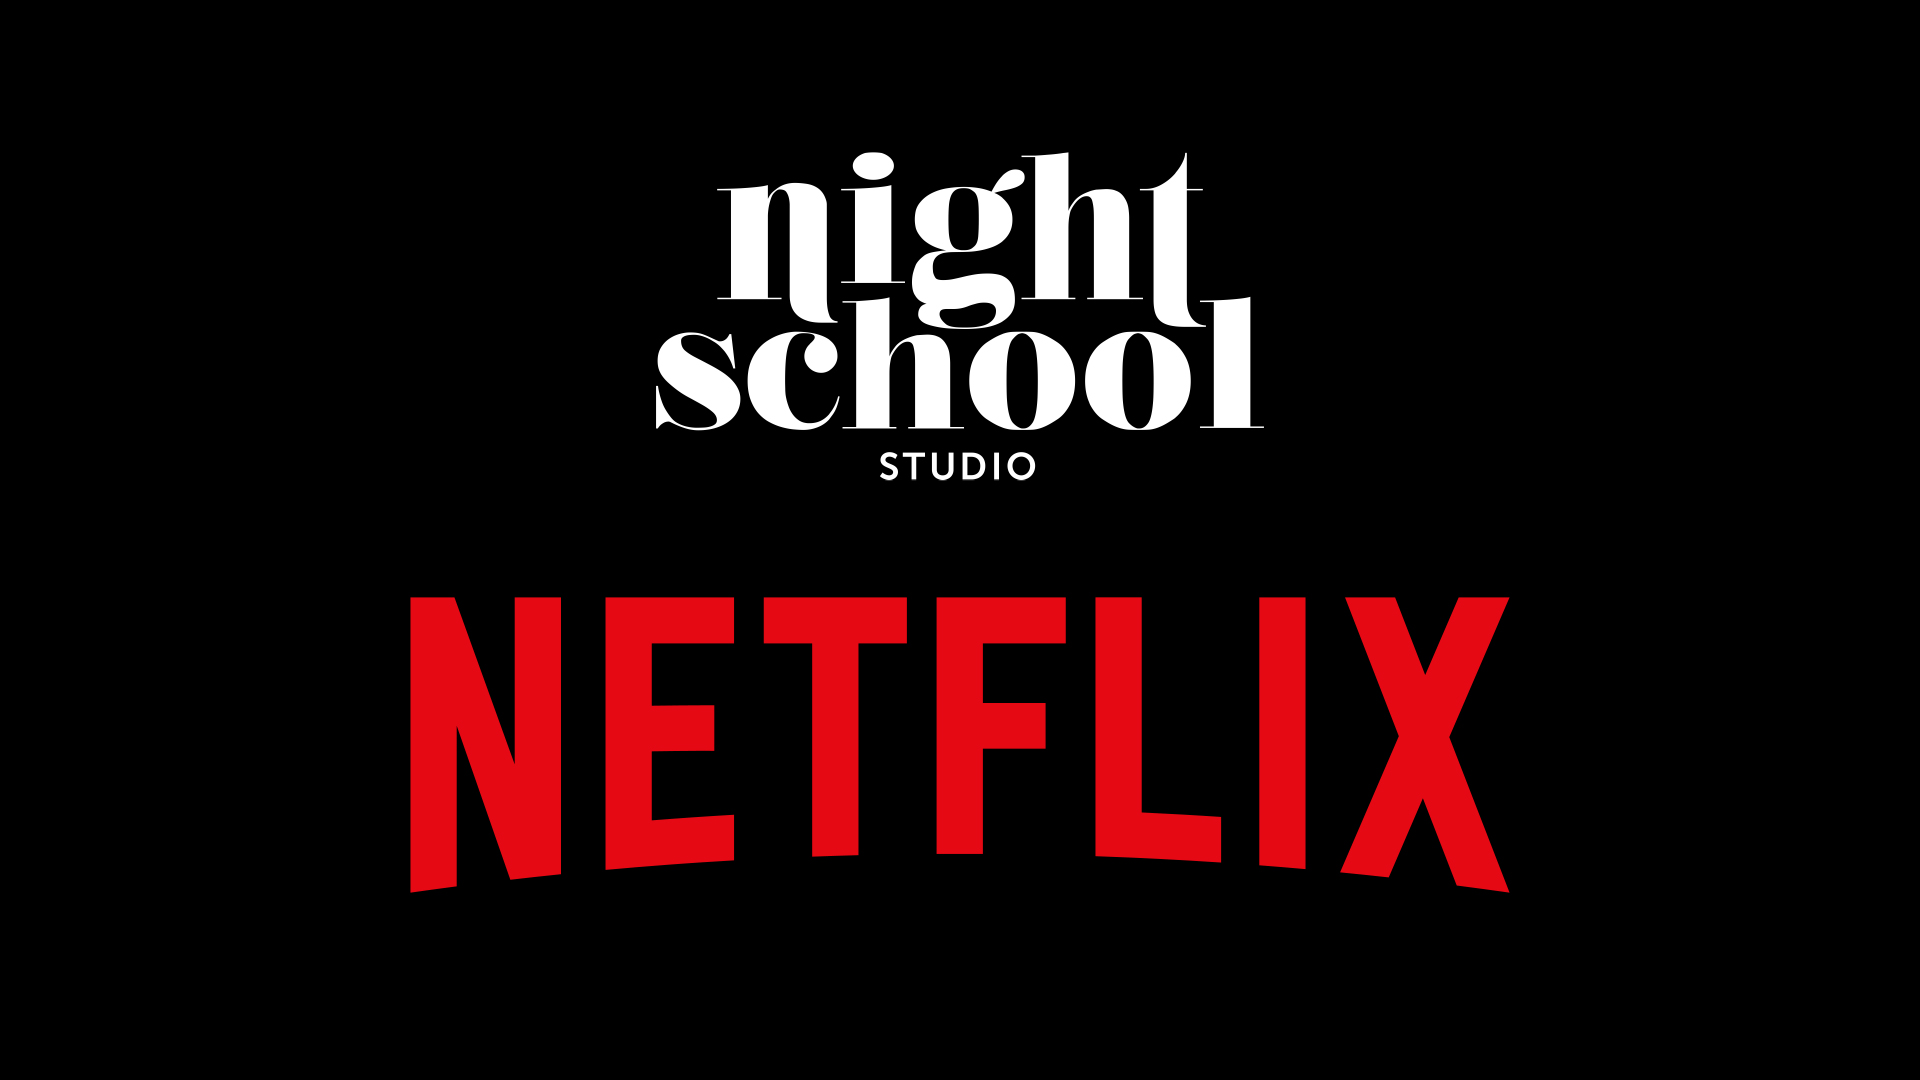 Netflix acquires game creator Night School Studio